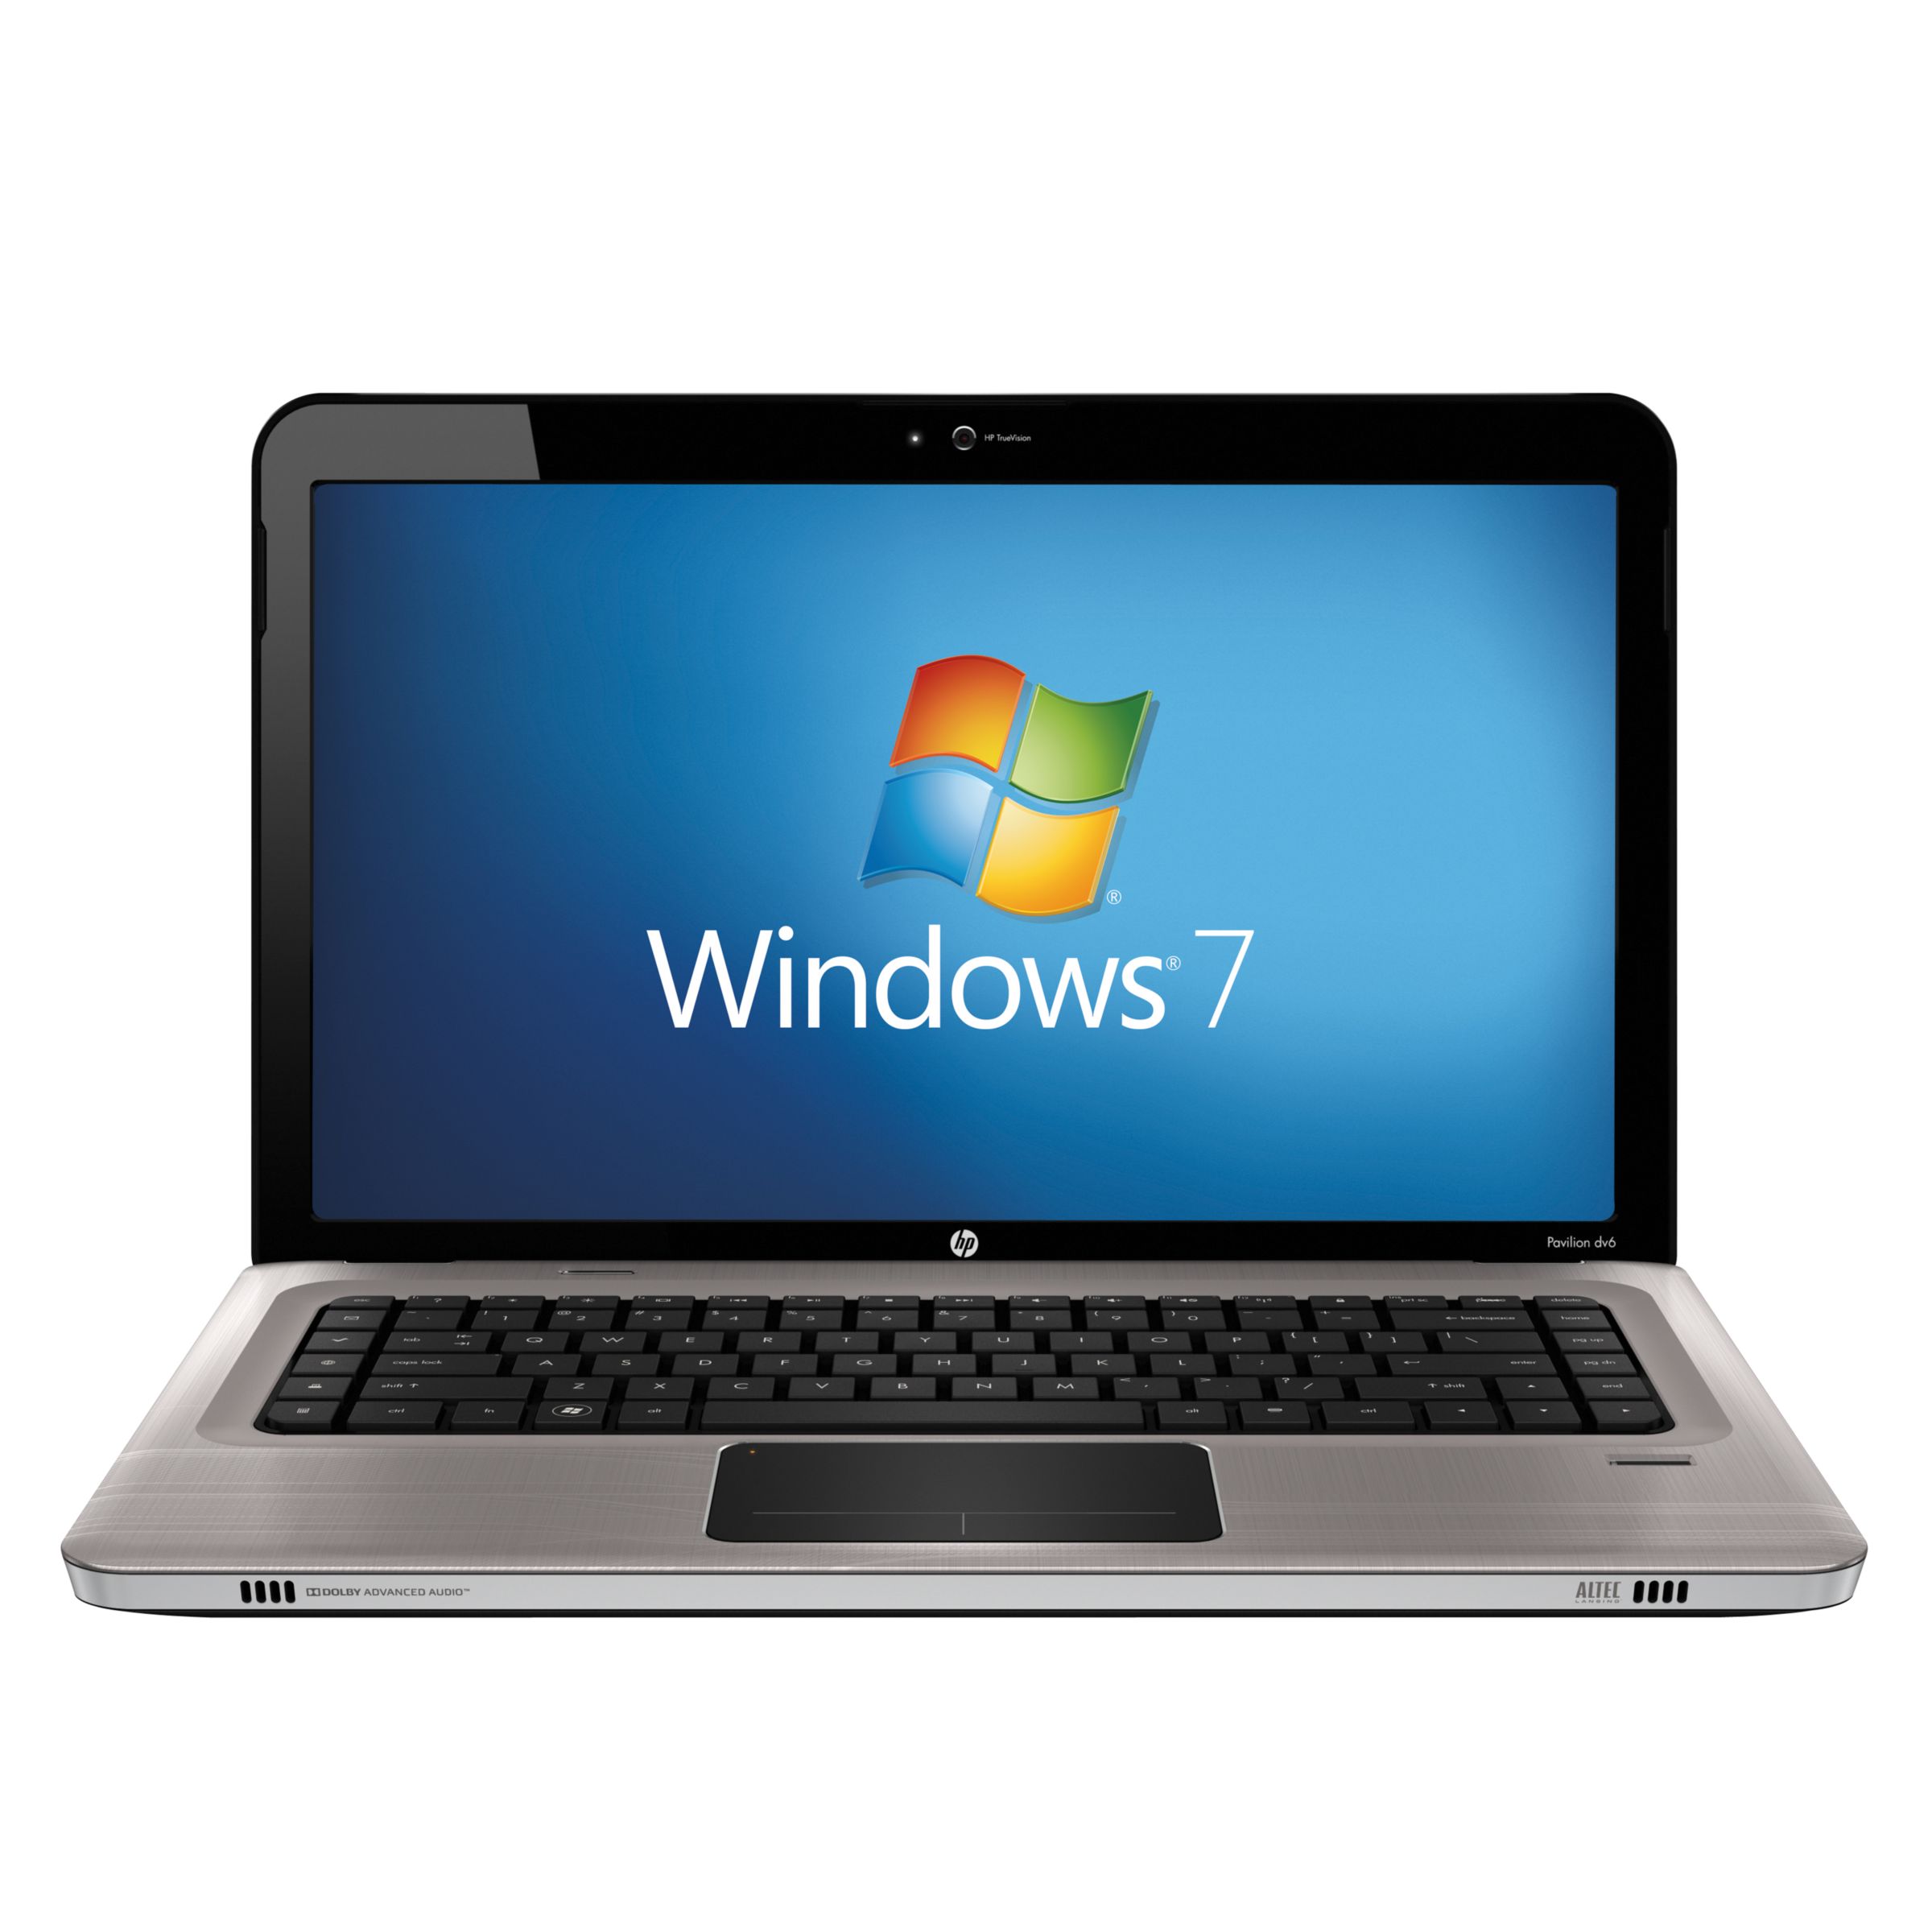 HP Pavilion DV6-3131SA Laptop, AMD Phenom II, 500GB, 2.1GHz, 4GB RAM with 15.6 Inch Display at John Lewis